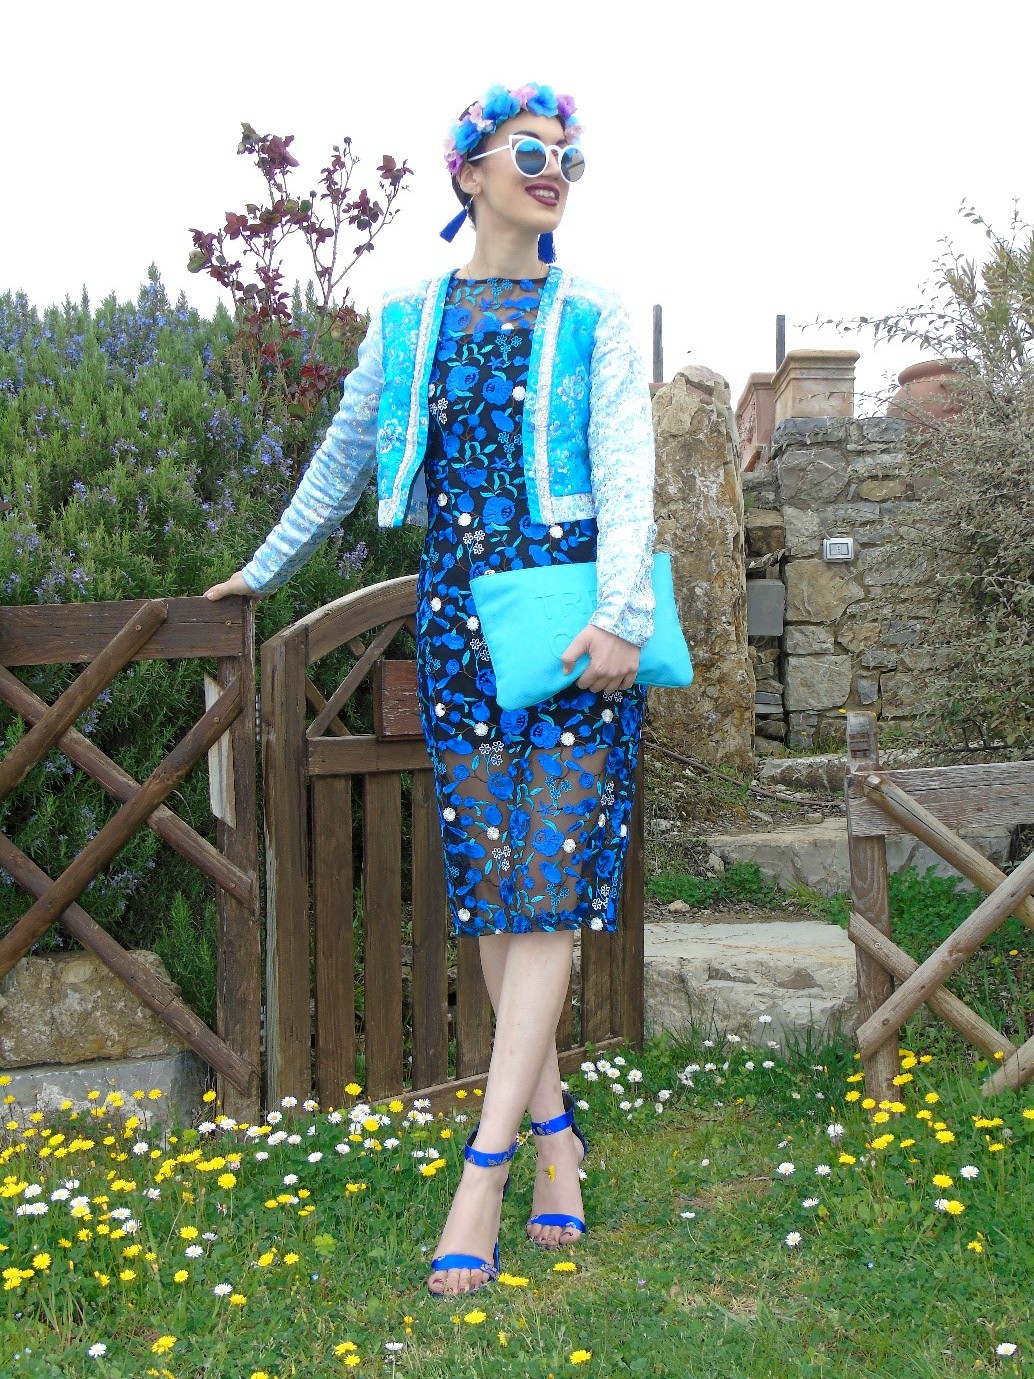 <img src="ana.jpg" alt="ana embroidered blue dress holiday in Tuscany"/>